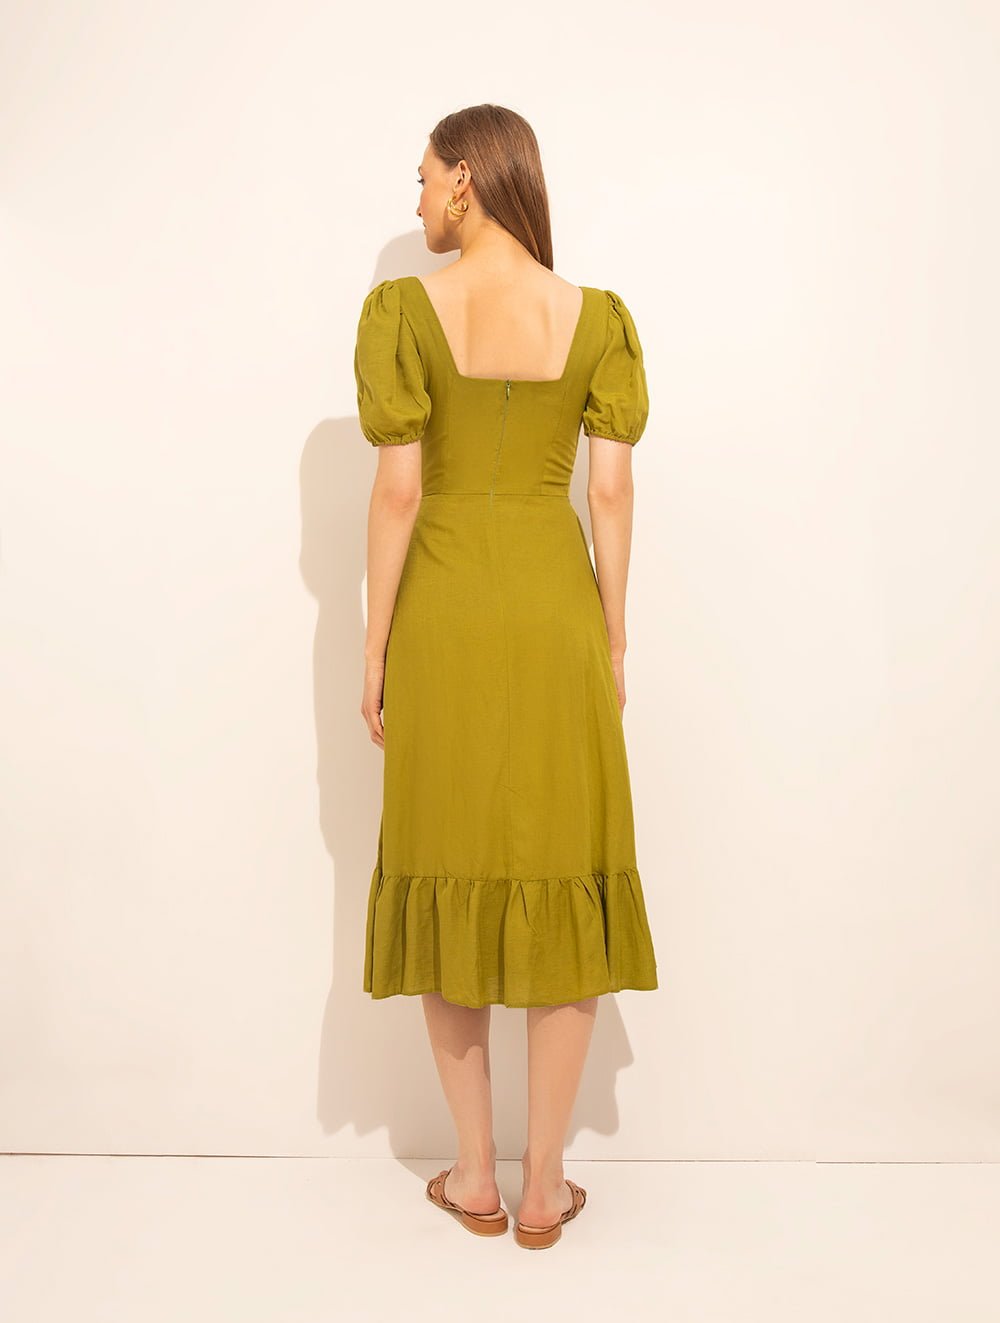 Olive dress SS 2022 3